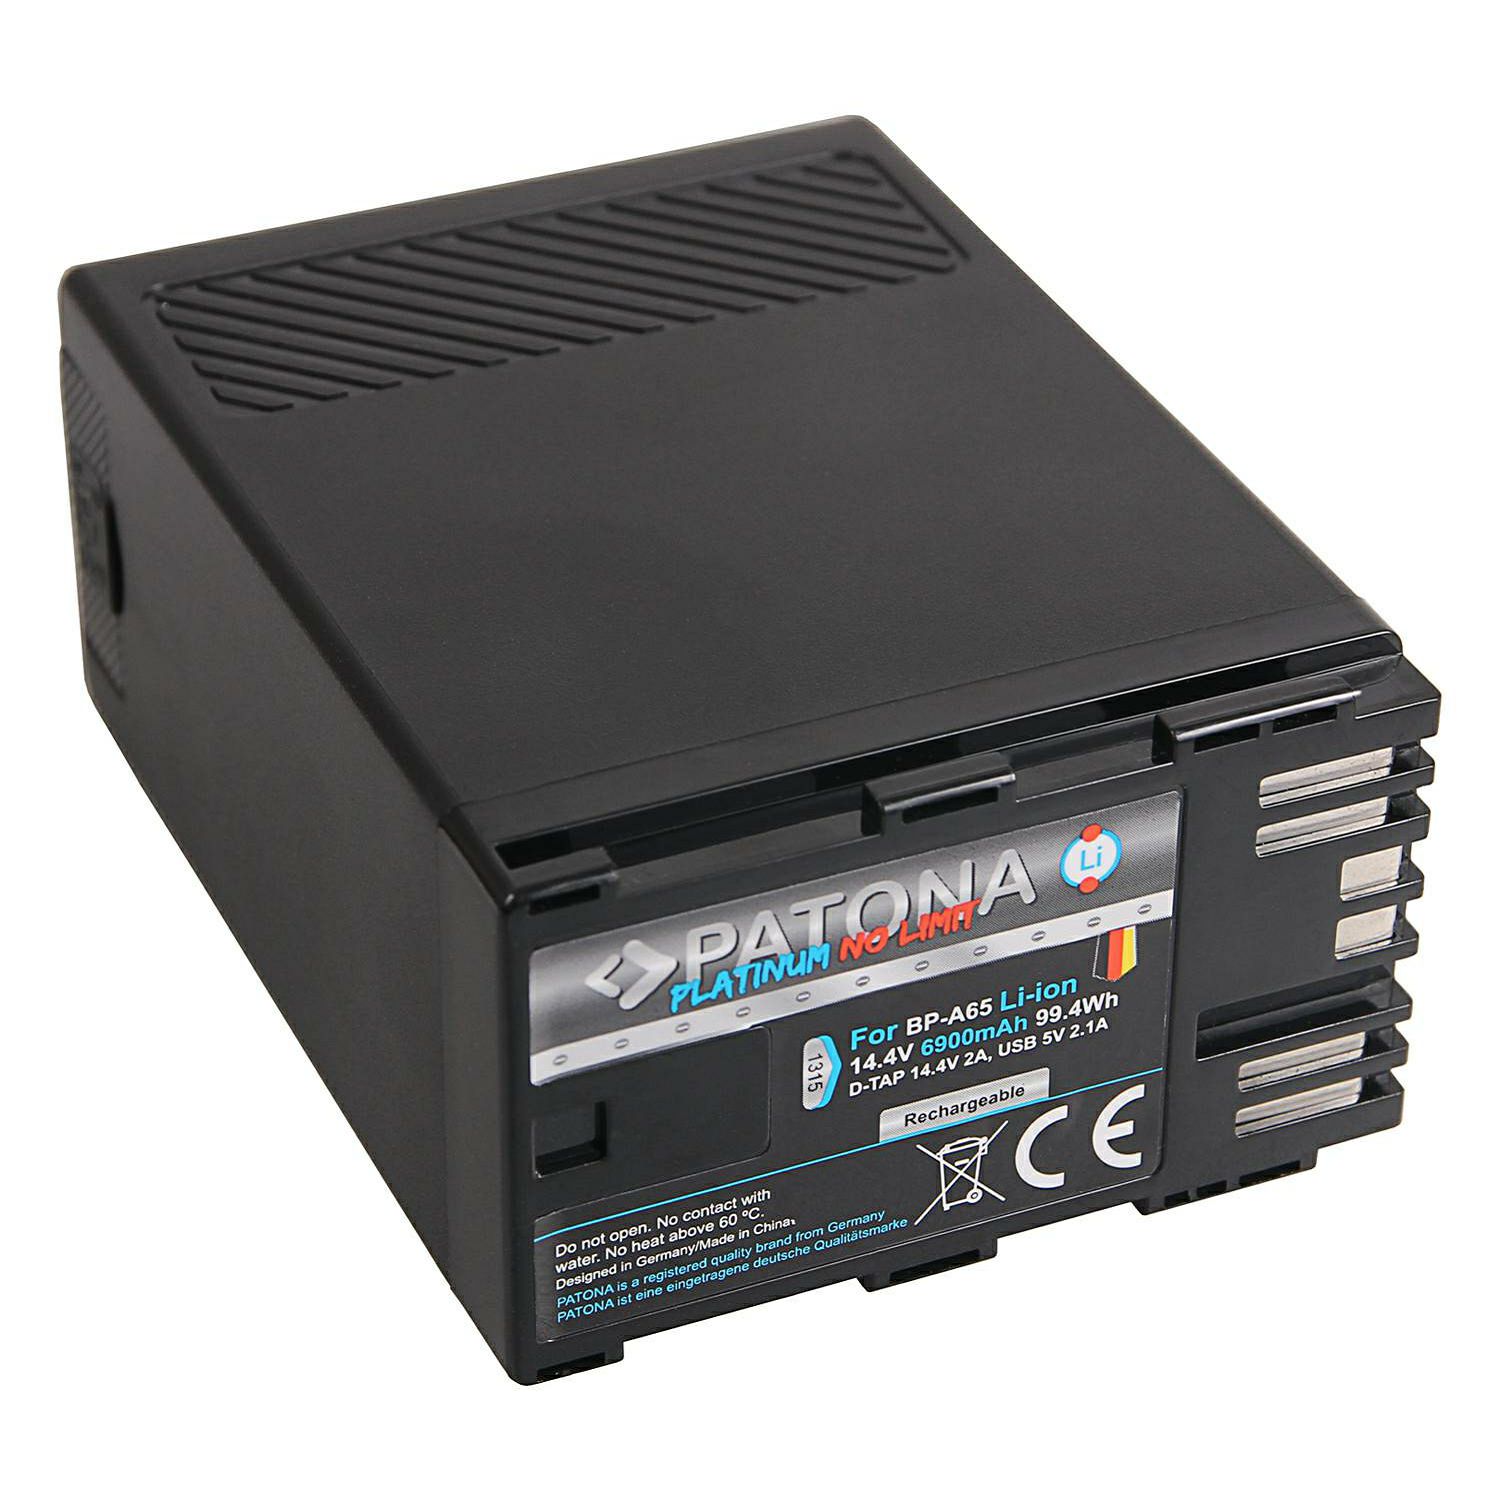 Patona BP-A65 Platinum 6900mAh 14.4V 99.4Wh baterija za Canon A60 A30 EOS C200 C300 Mark II XF705 D-Tap USB-Output